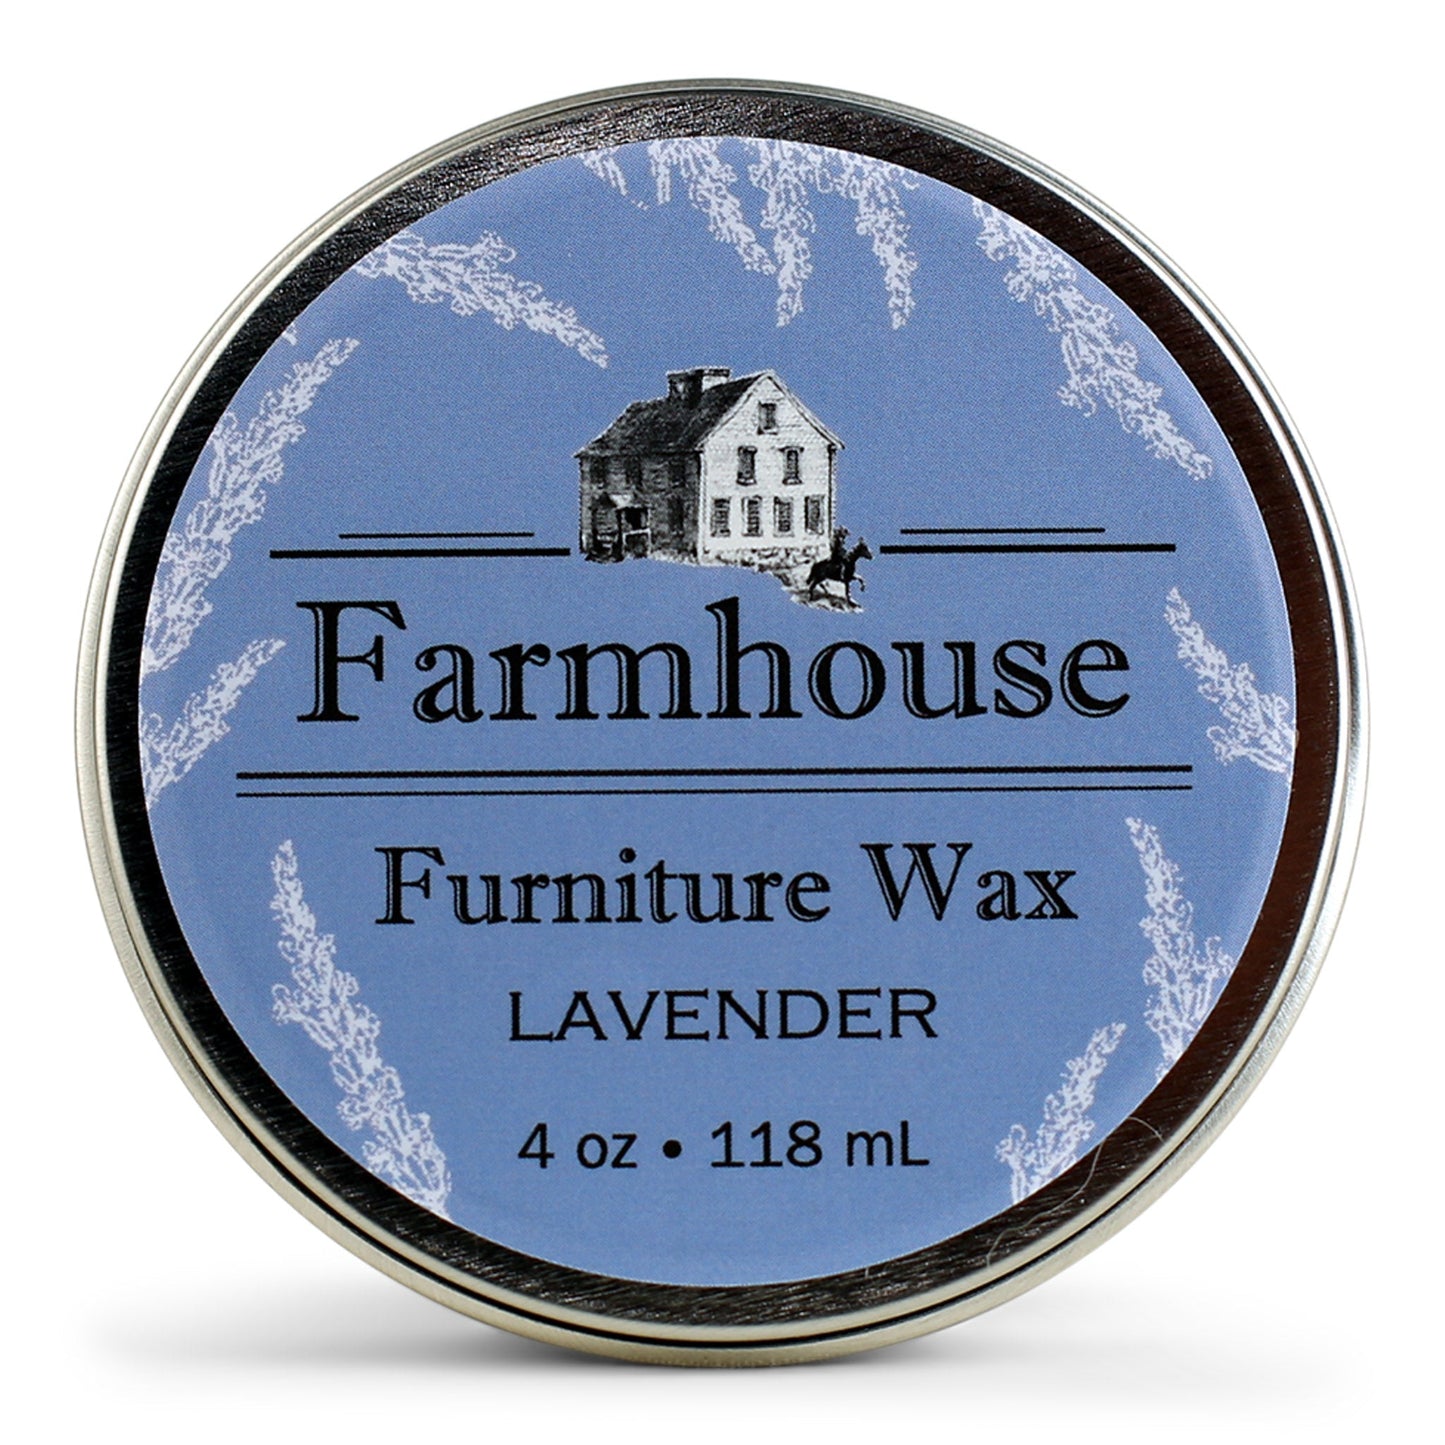 All-Natural Furniture Wax